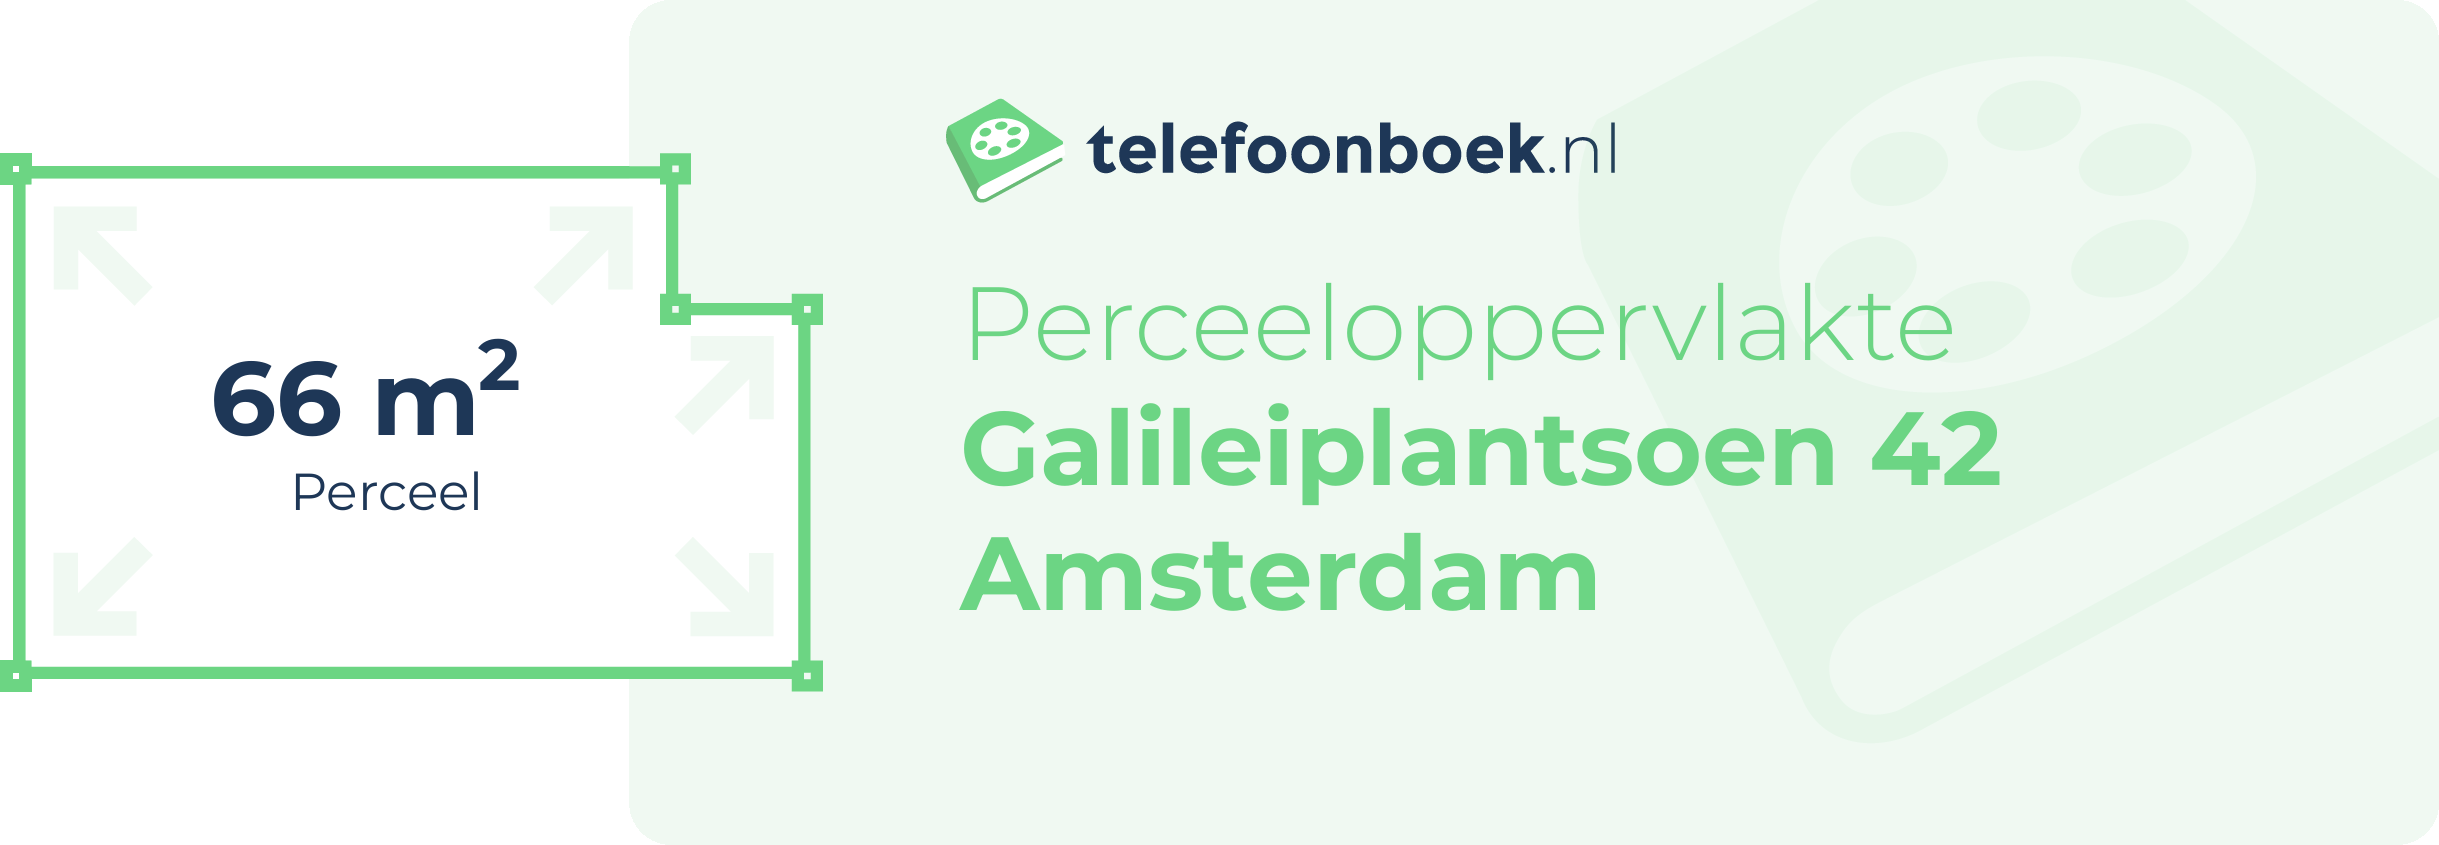 Perceeloppervlakte Galileiplantsoen 42 Amsterdam